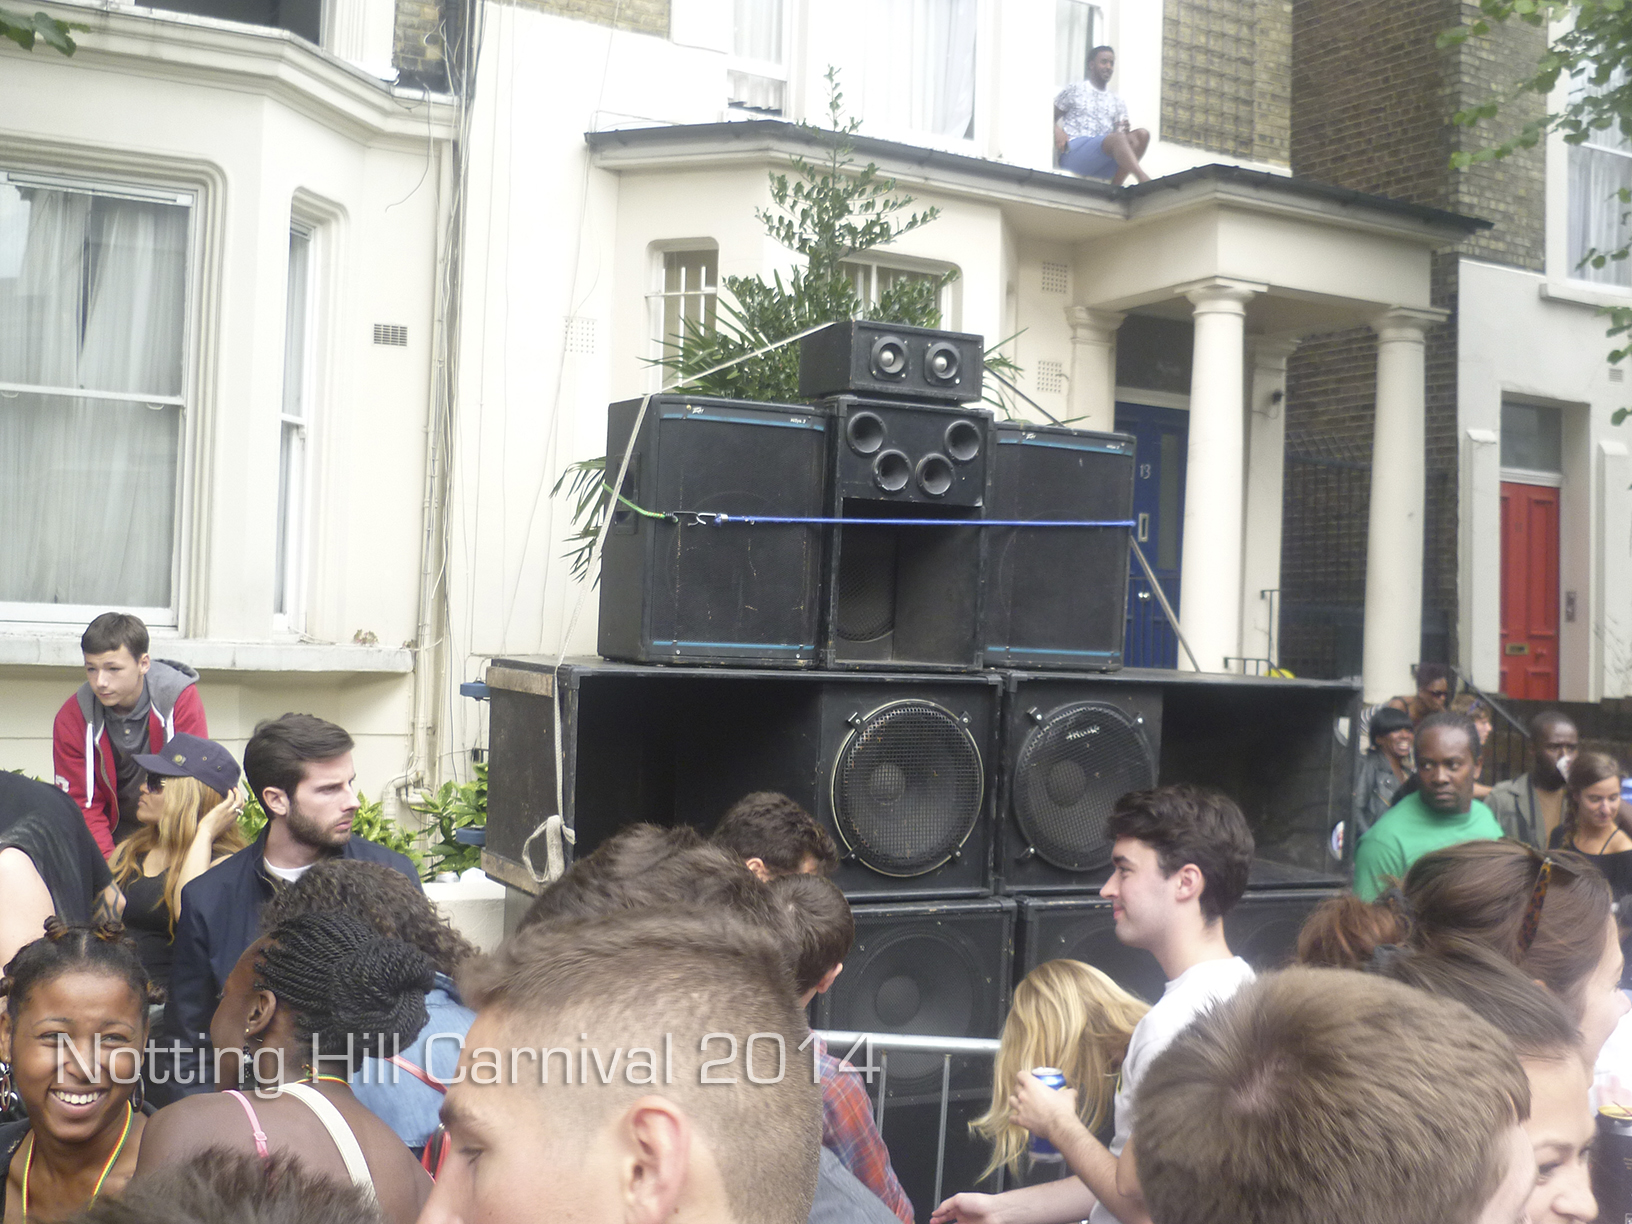 Notting-Hill-Carnival-2014-Street-Sound-System-16